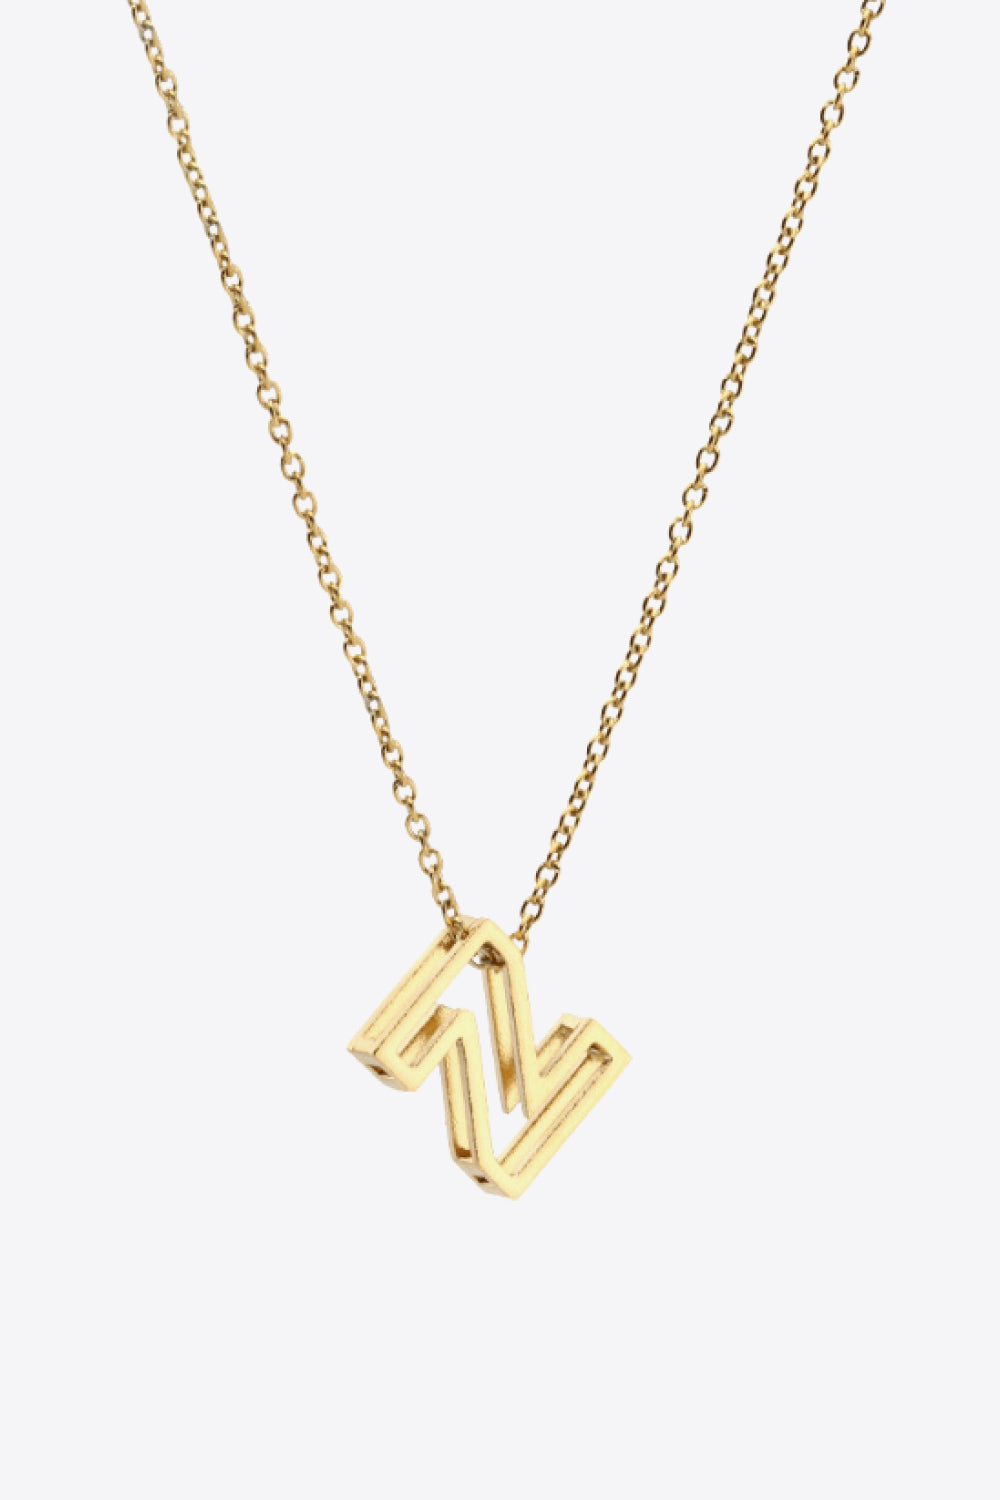 U to Z Letter Pendant Necklace